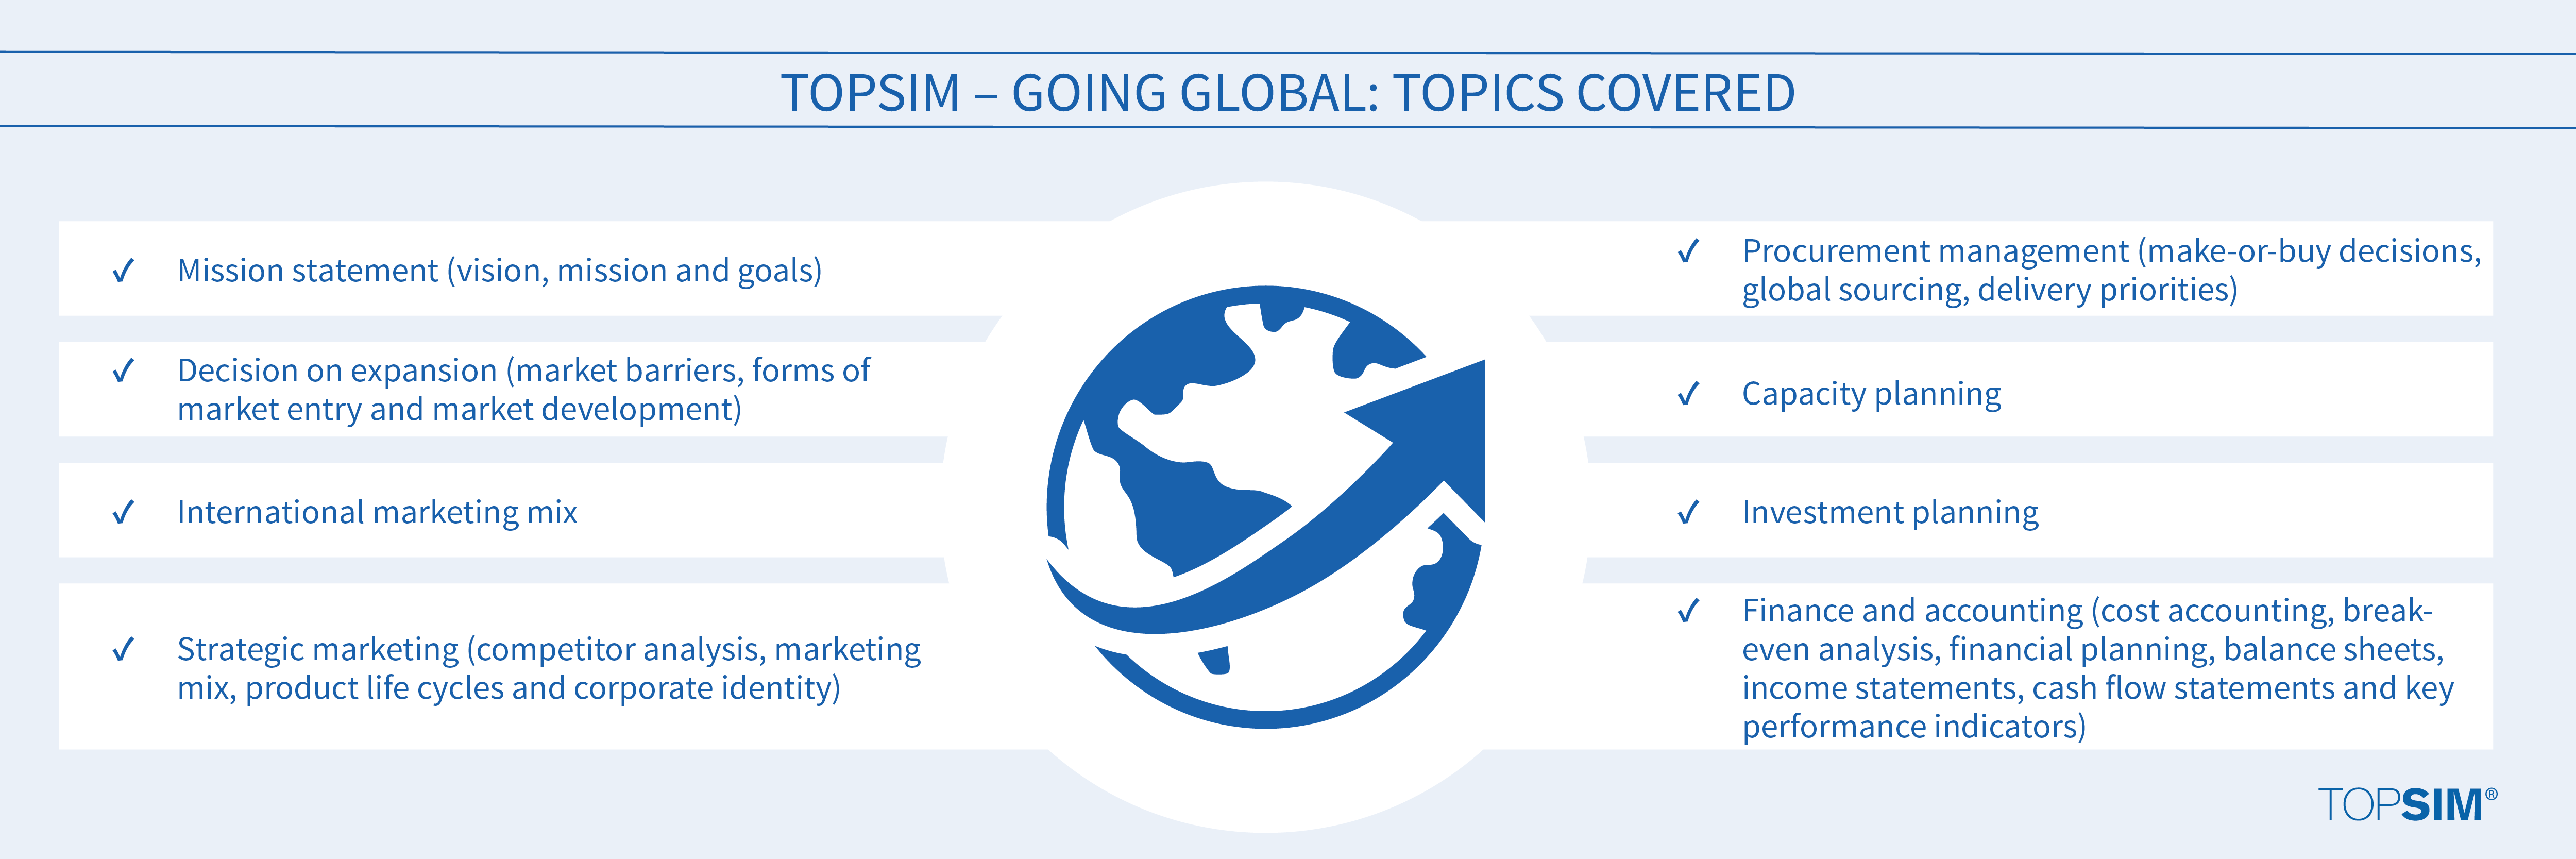 TOPSIM – Going Global Topics Covered